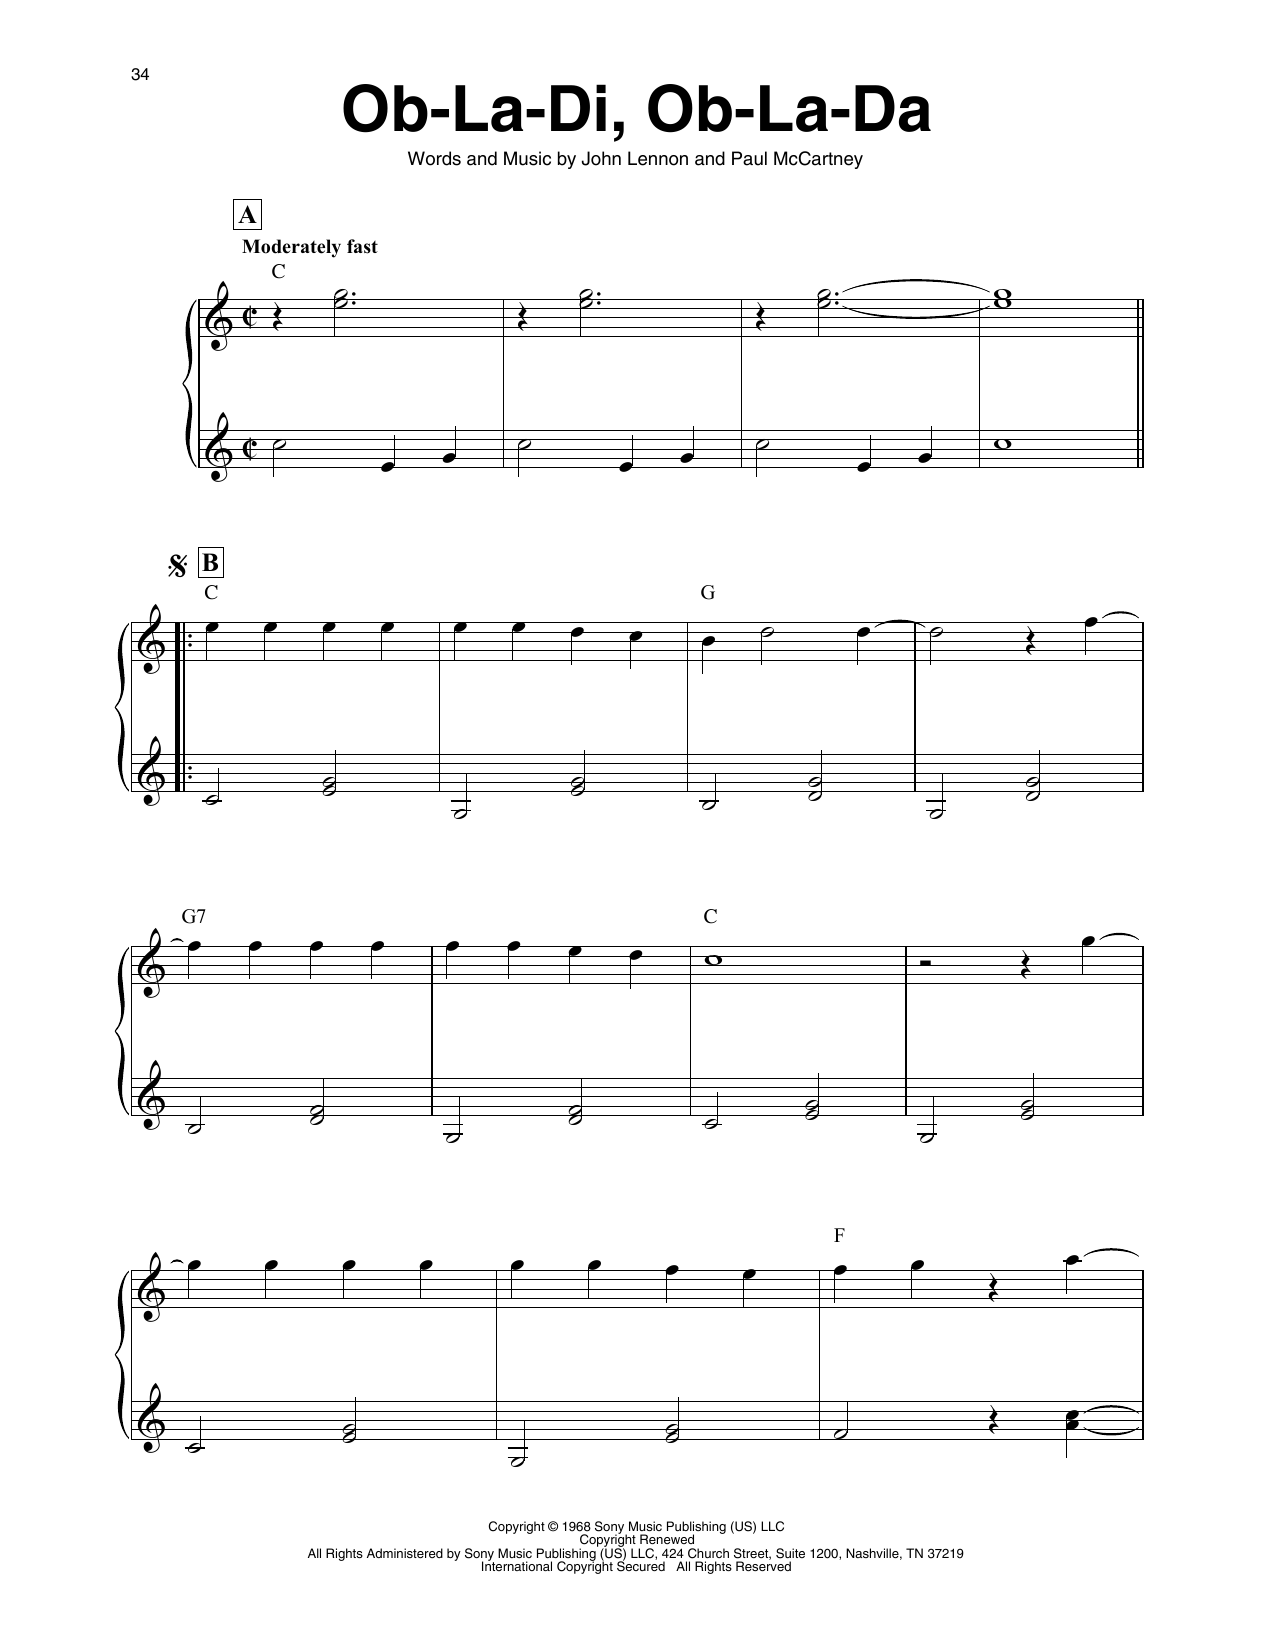 The Beatles Ob-La-Di, Ob-La-Da (arr. Maeve Gilchrist) Sheet Music Notes & Chords for Harp - Download or Print PDF